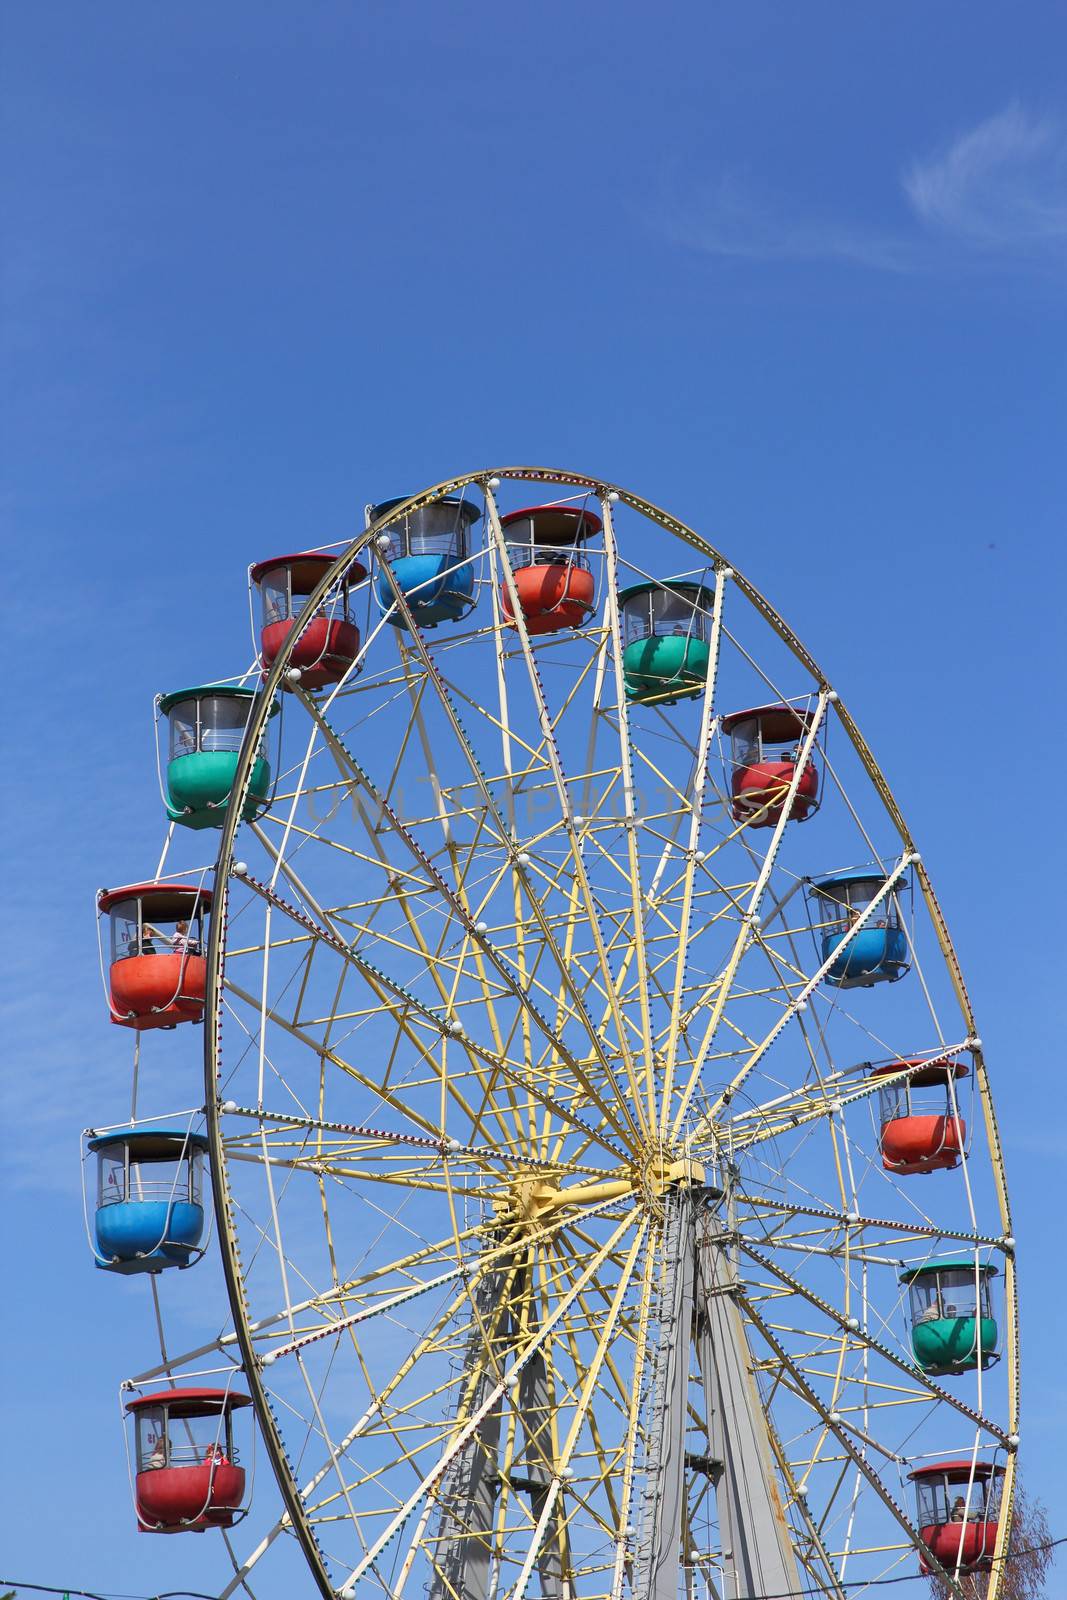 Atraktsion colorful ferris wheel against the blue sky by aarrows